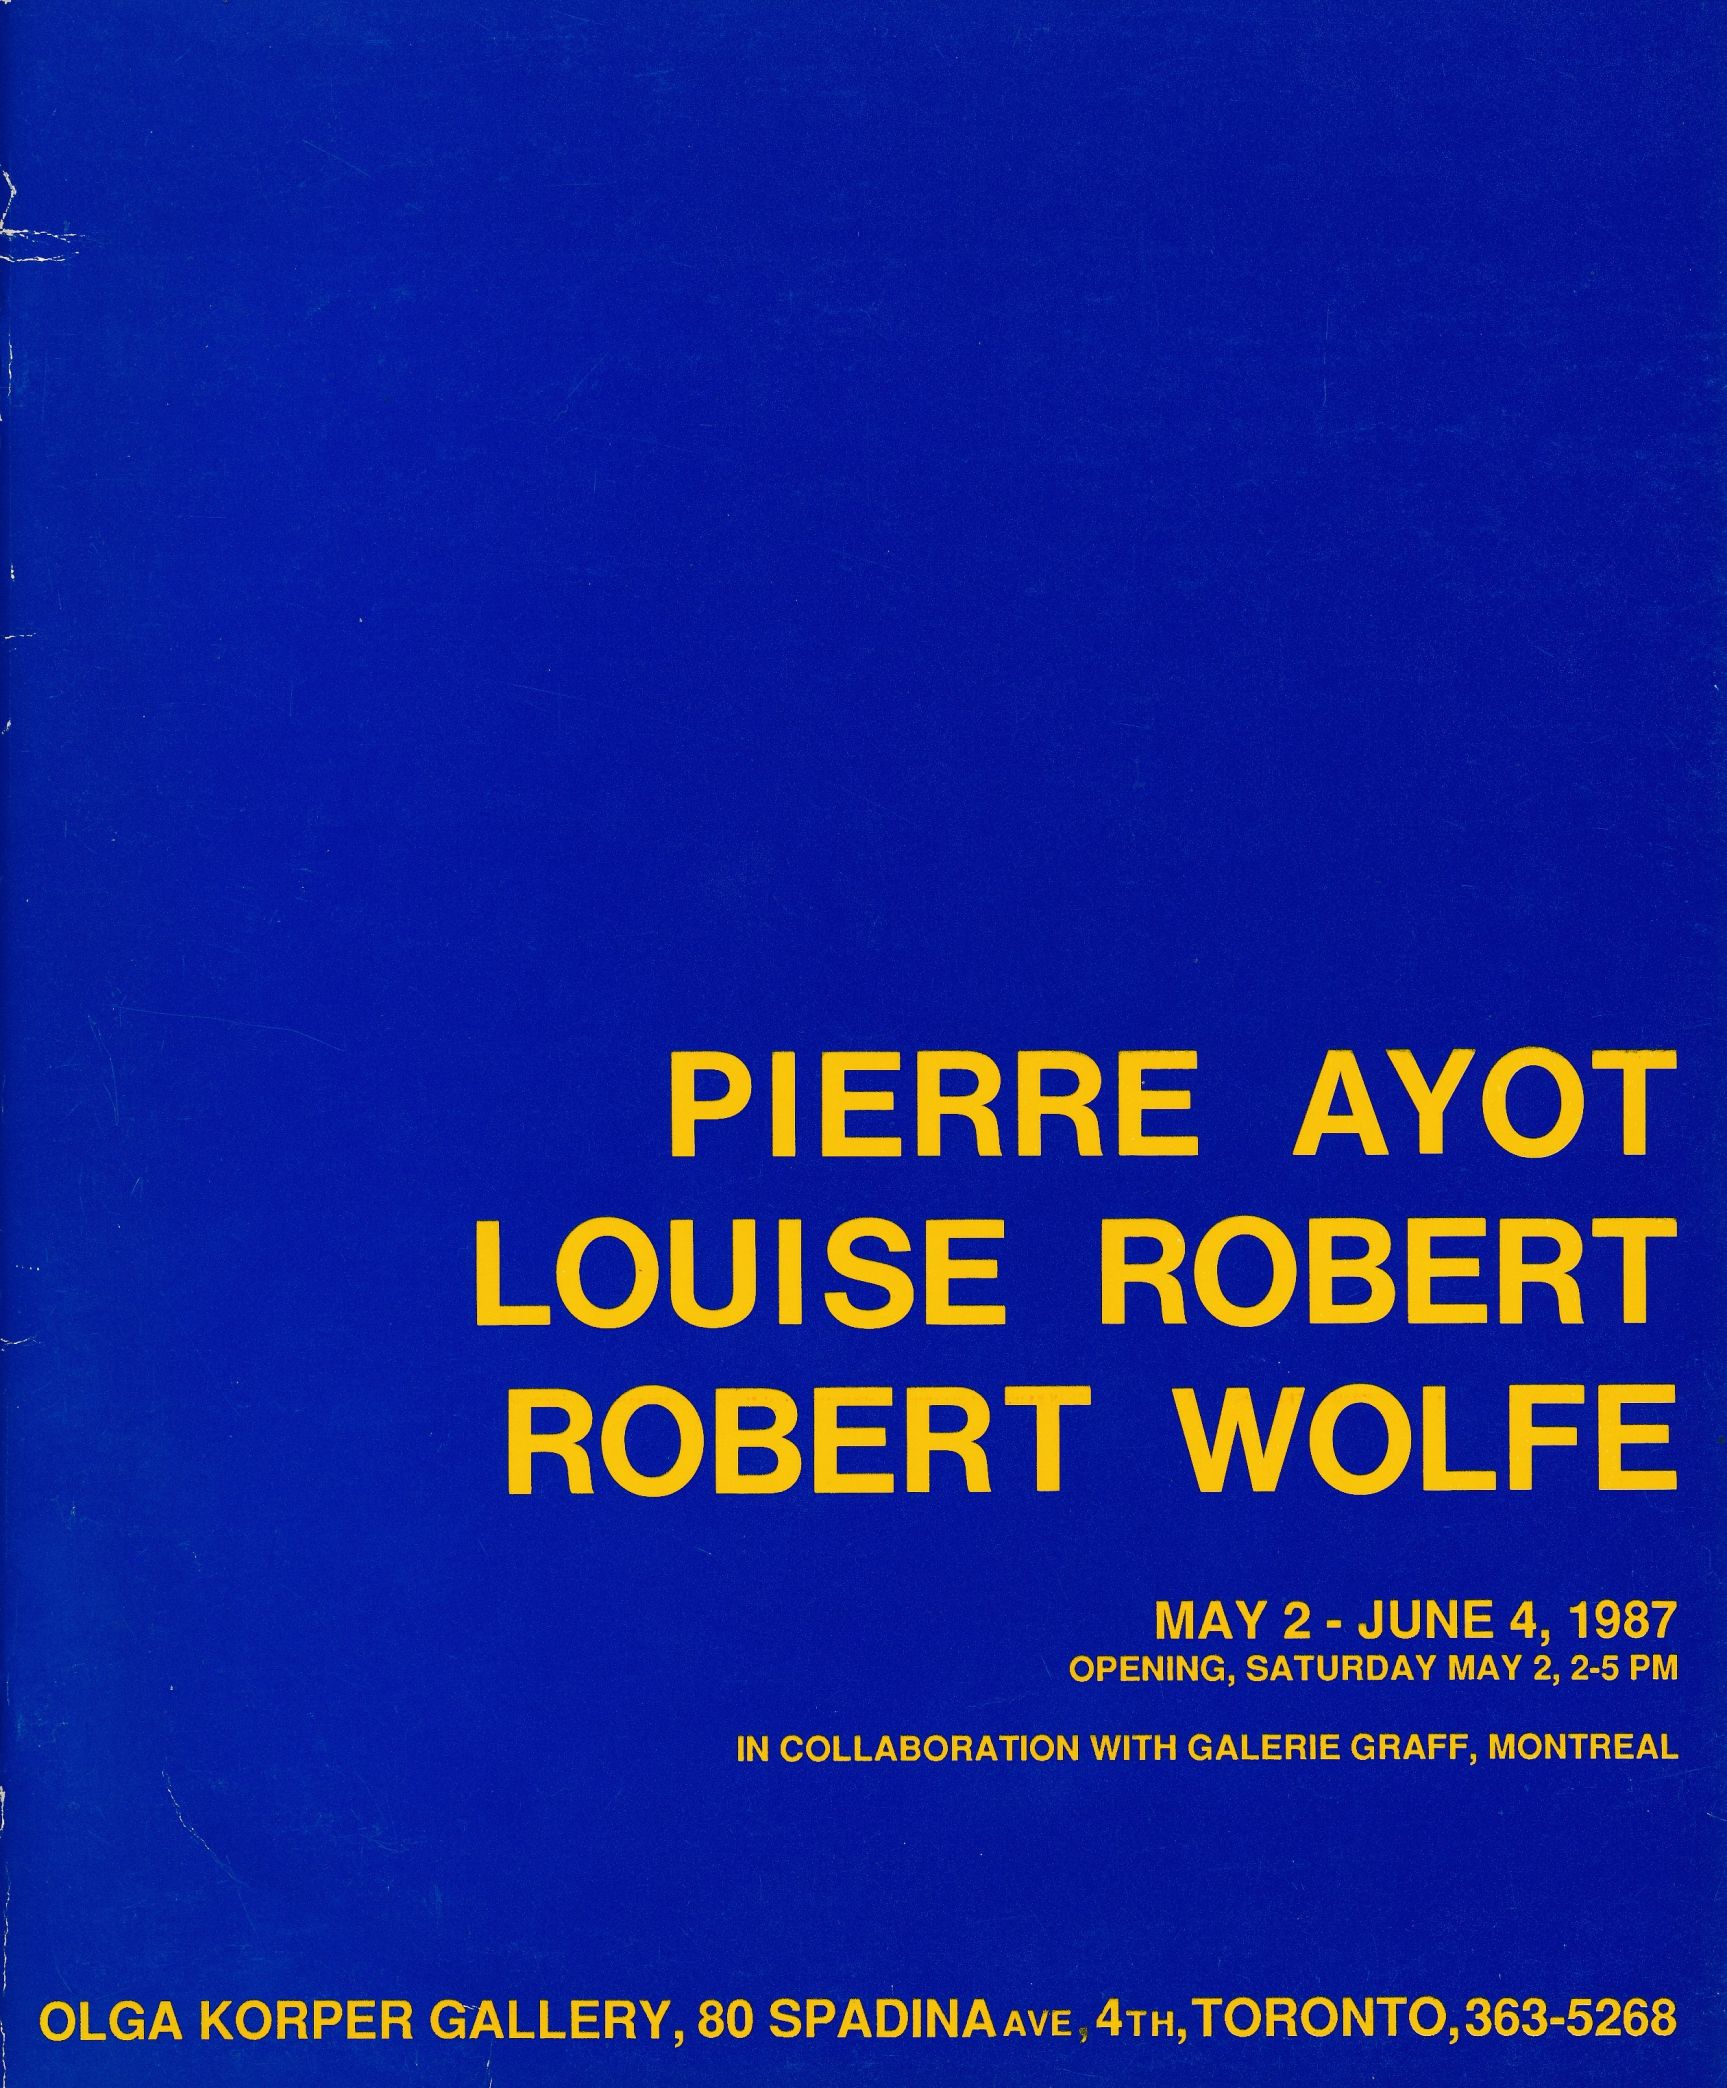 Couverture du catalogue d’exposition Pierre Ayot, Louise Robert, Robert Wolfe, Toronto, Olga Korper Gallery, 1987.